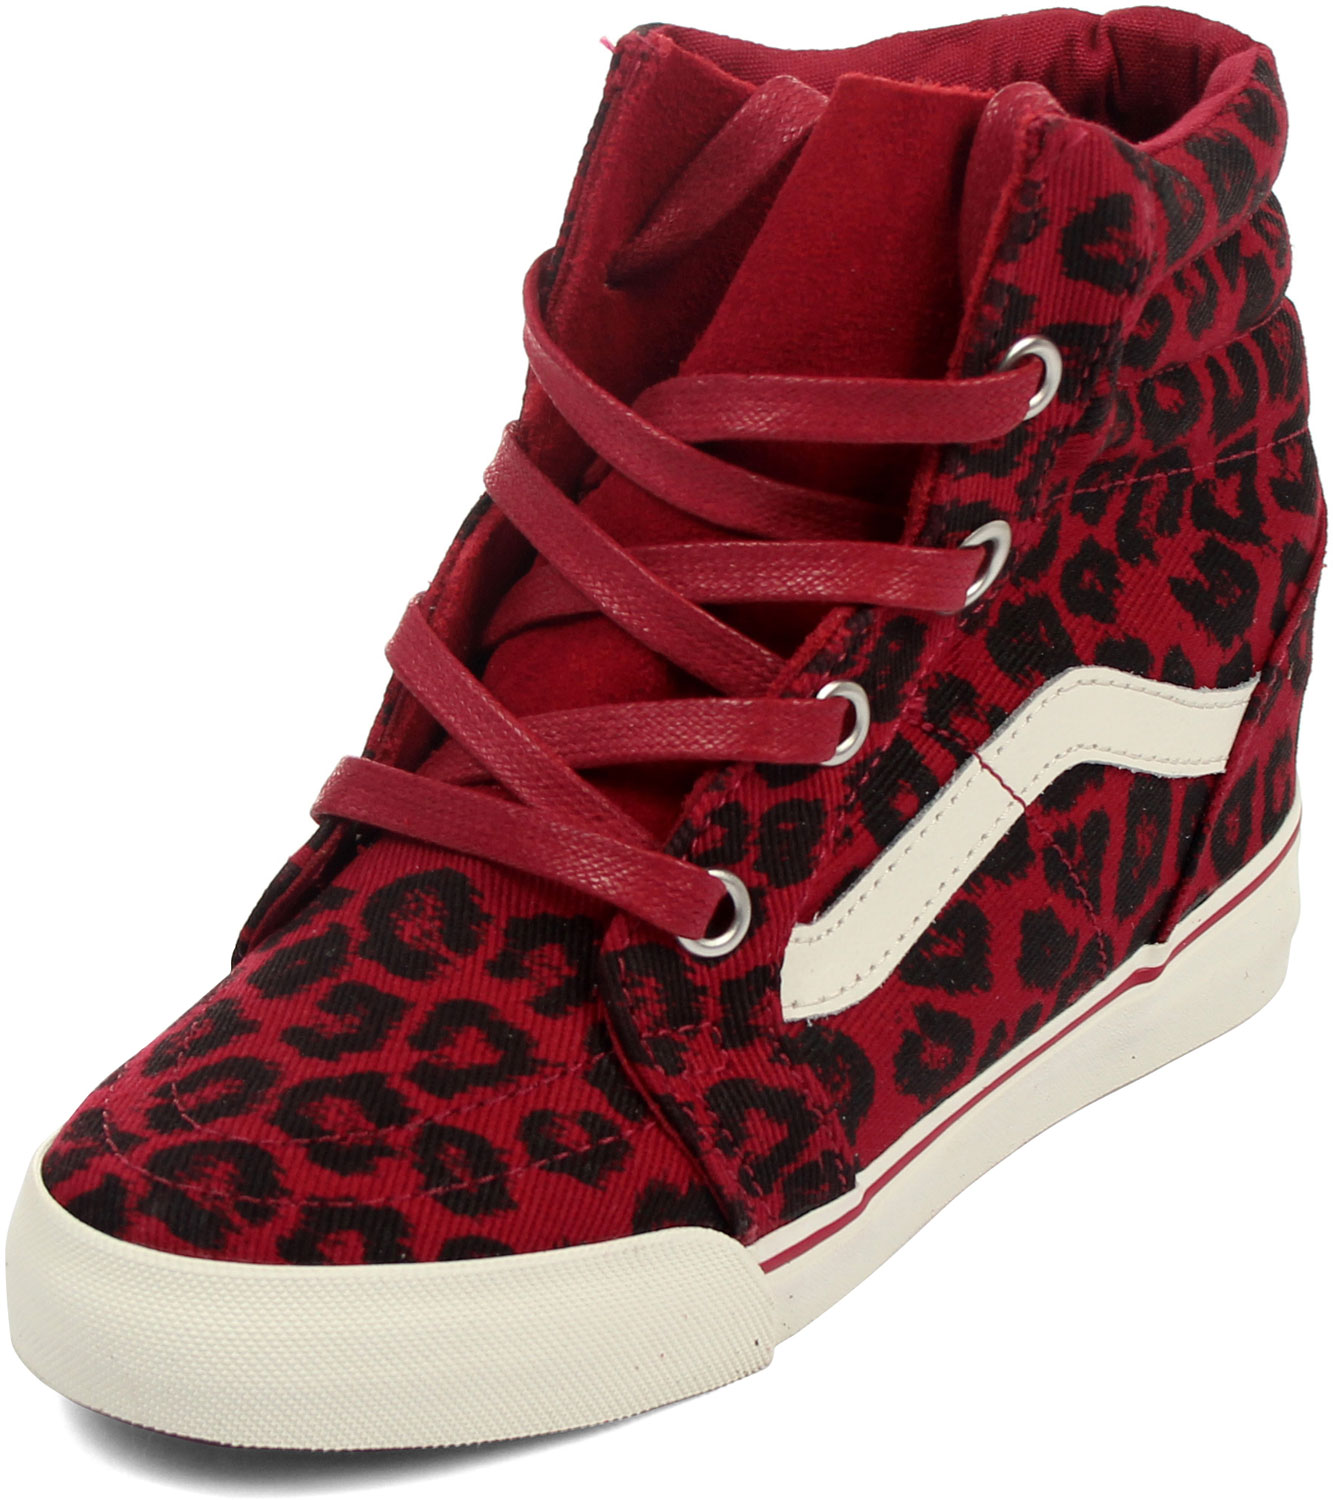 Vans - Womens Sk8-Hi Wedge Shoes in Leopard Red/Marshmallow شطاف المسافر